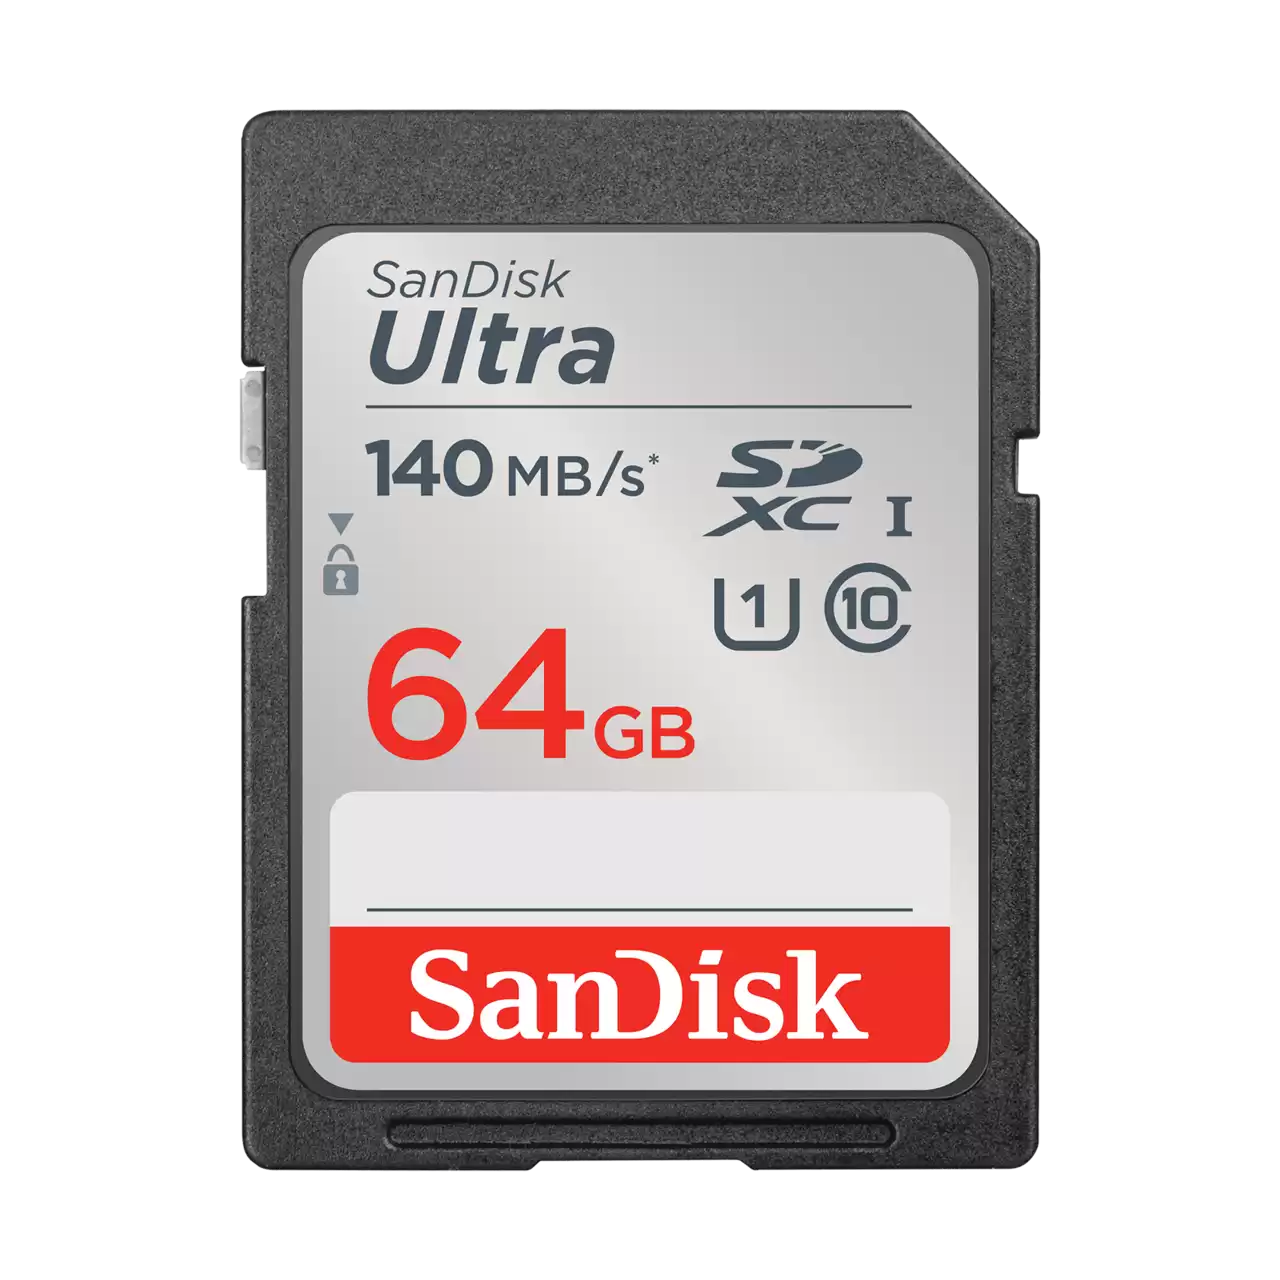 SanDisk SD Ultra SDHC/SDXC Memory Card - 64GB